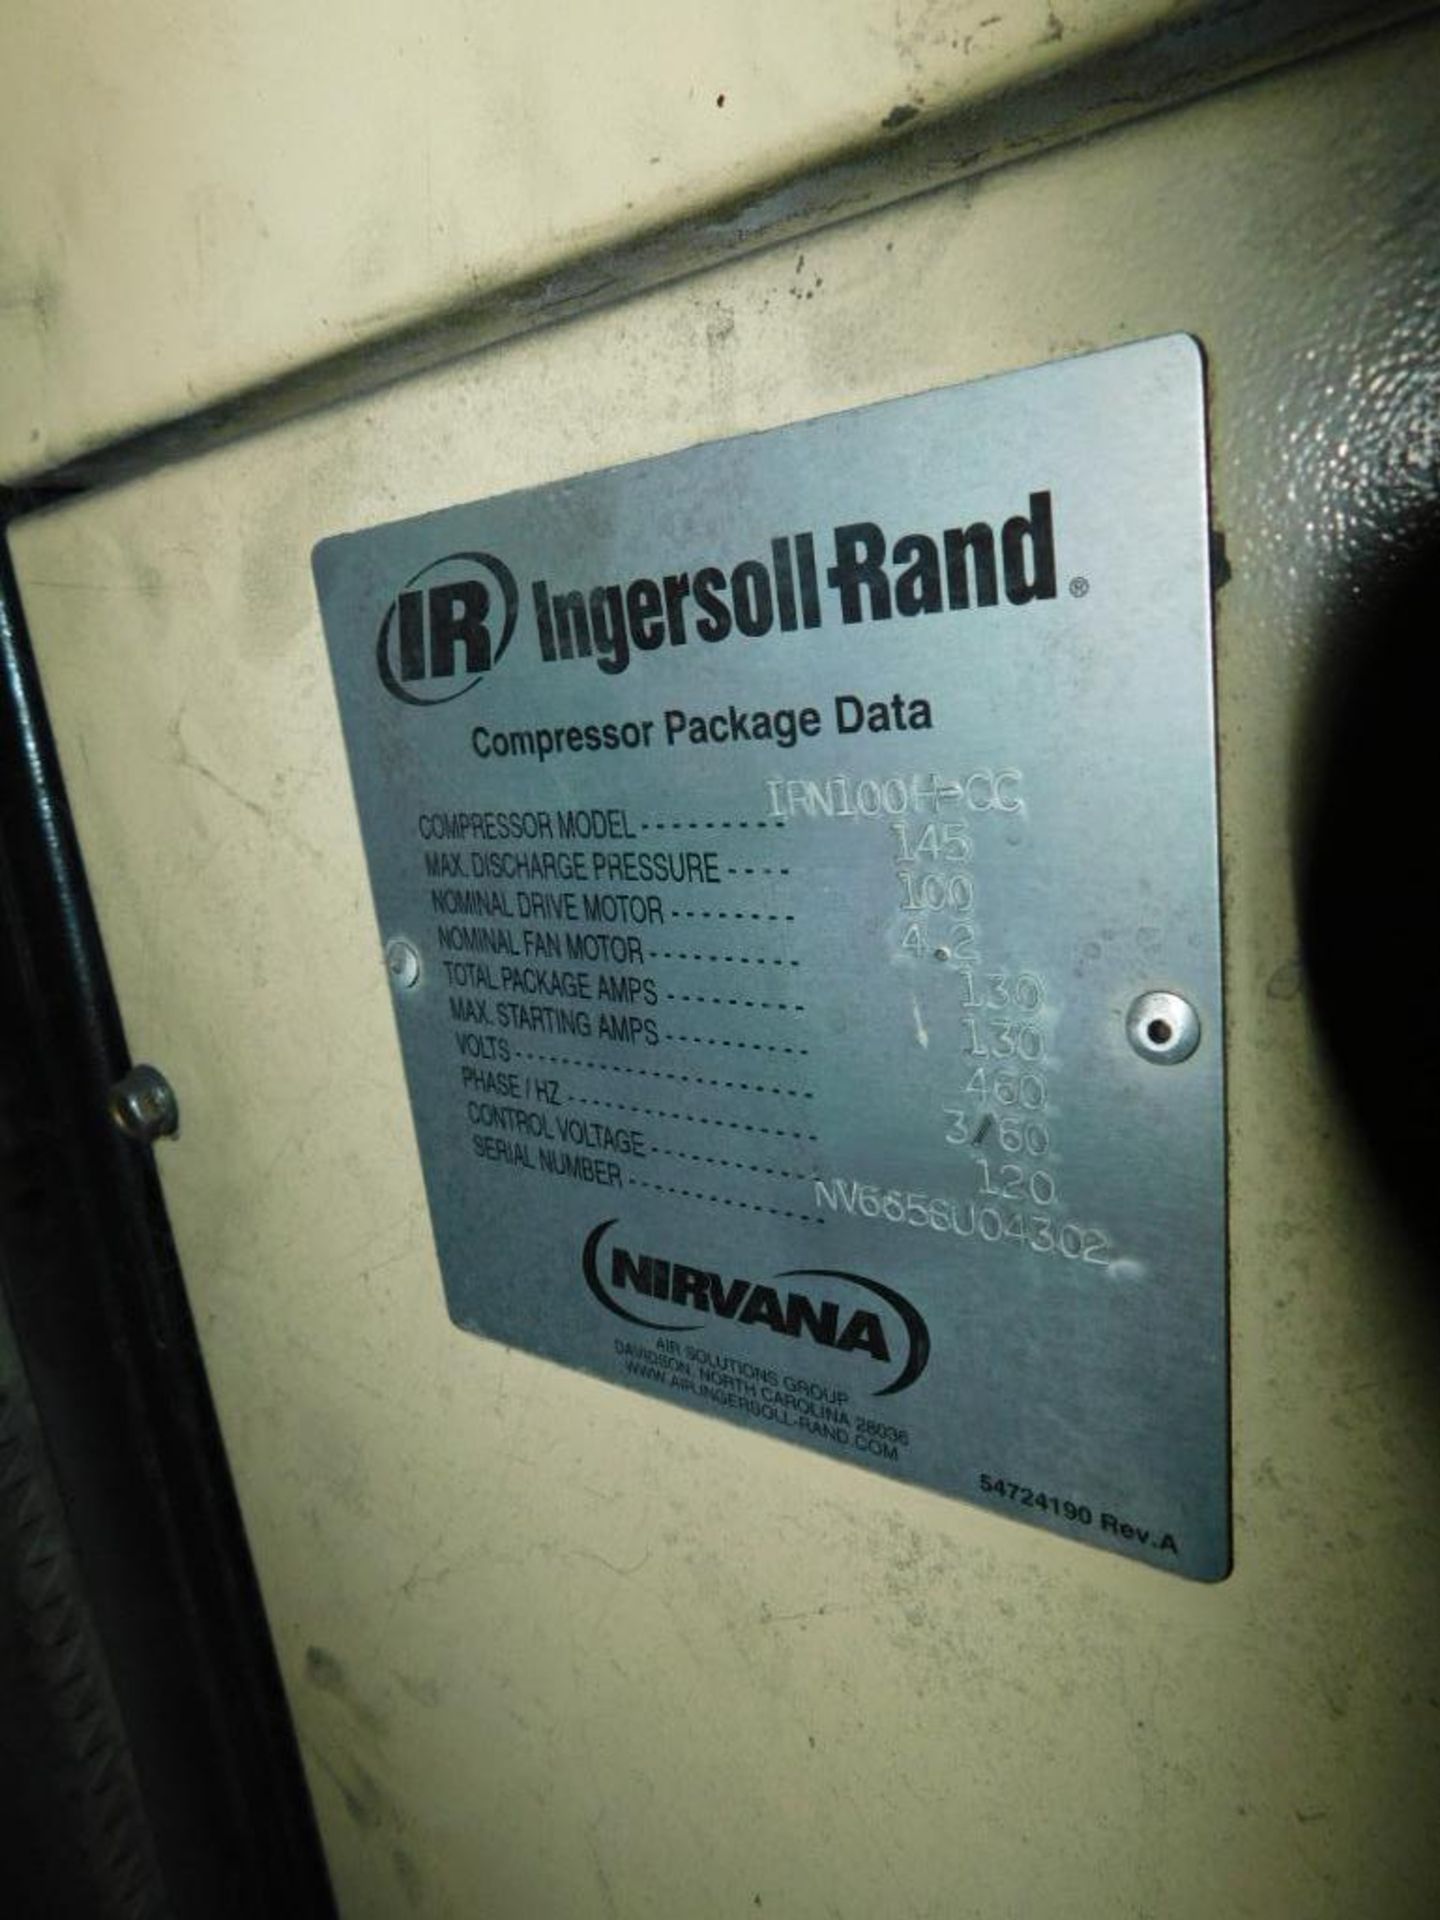 Ingersoll Rand Air Compressor. Model: IRN100H-CC, S/N: NV6658U04302 - Image 12 of 12